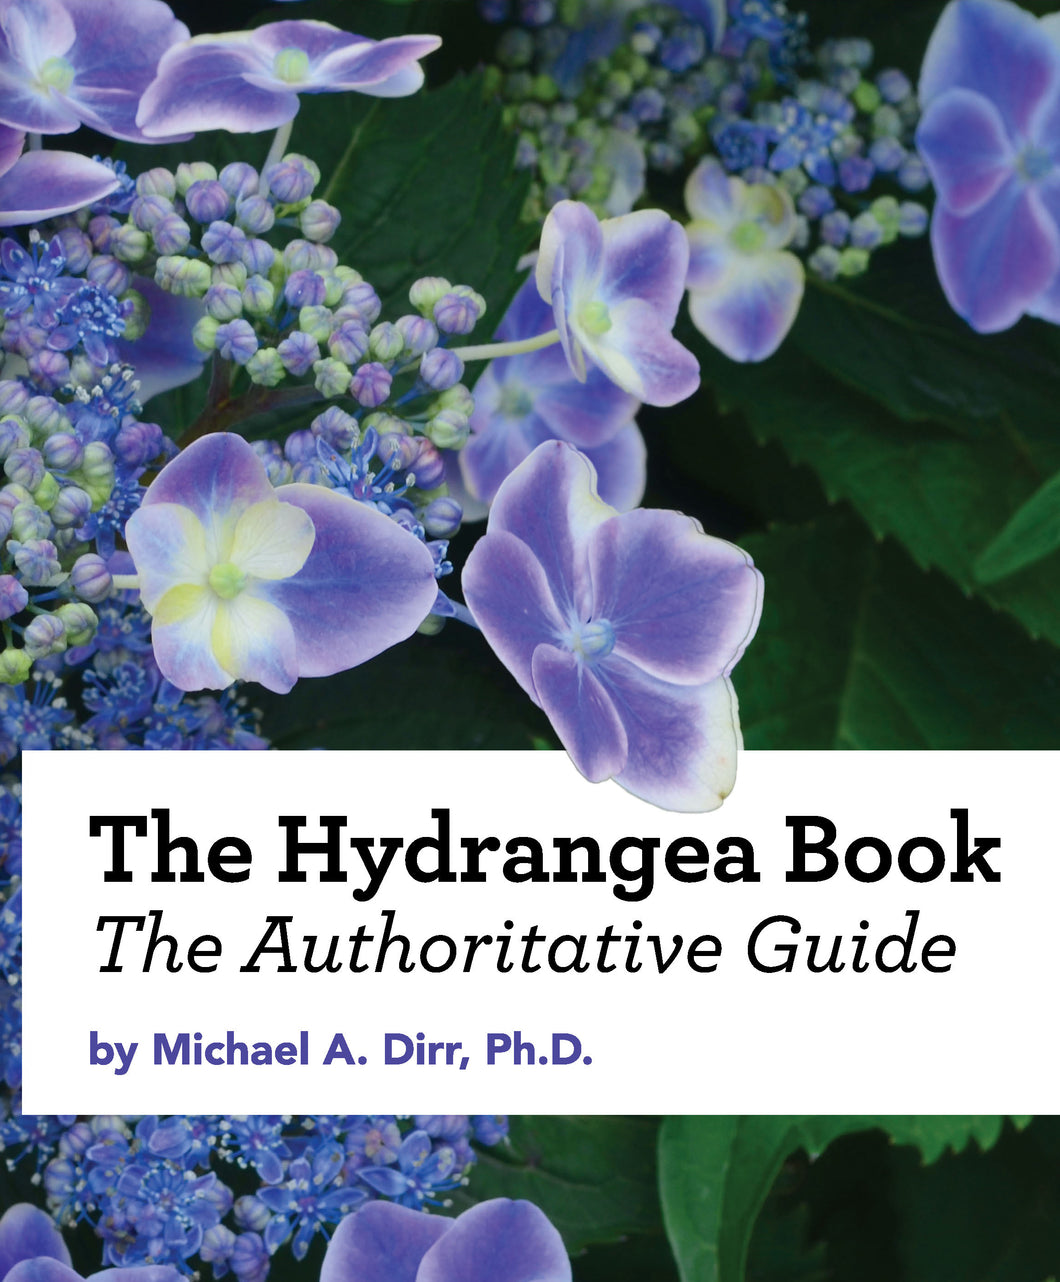 The Hydrangea Book: The Authoritative Guide